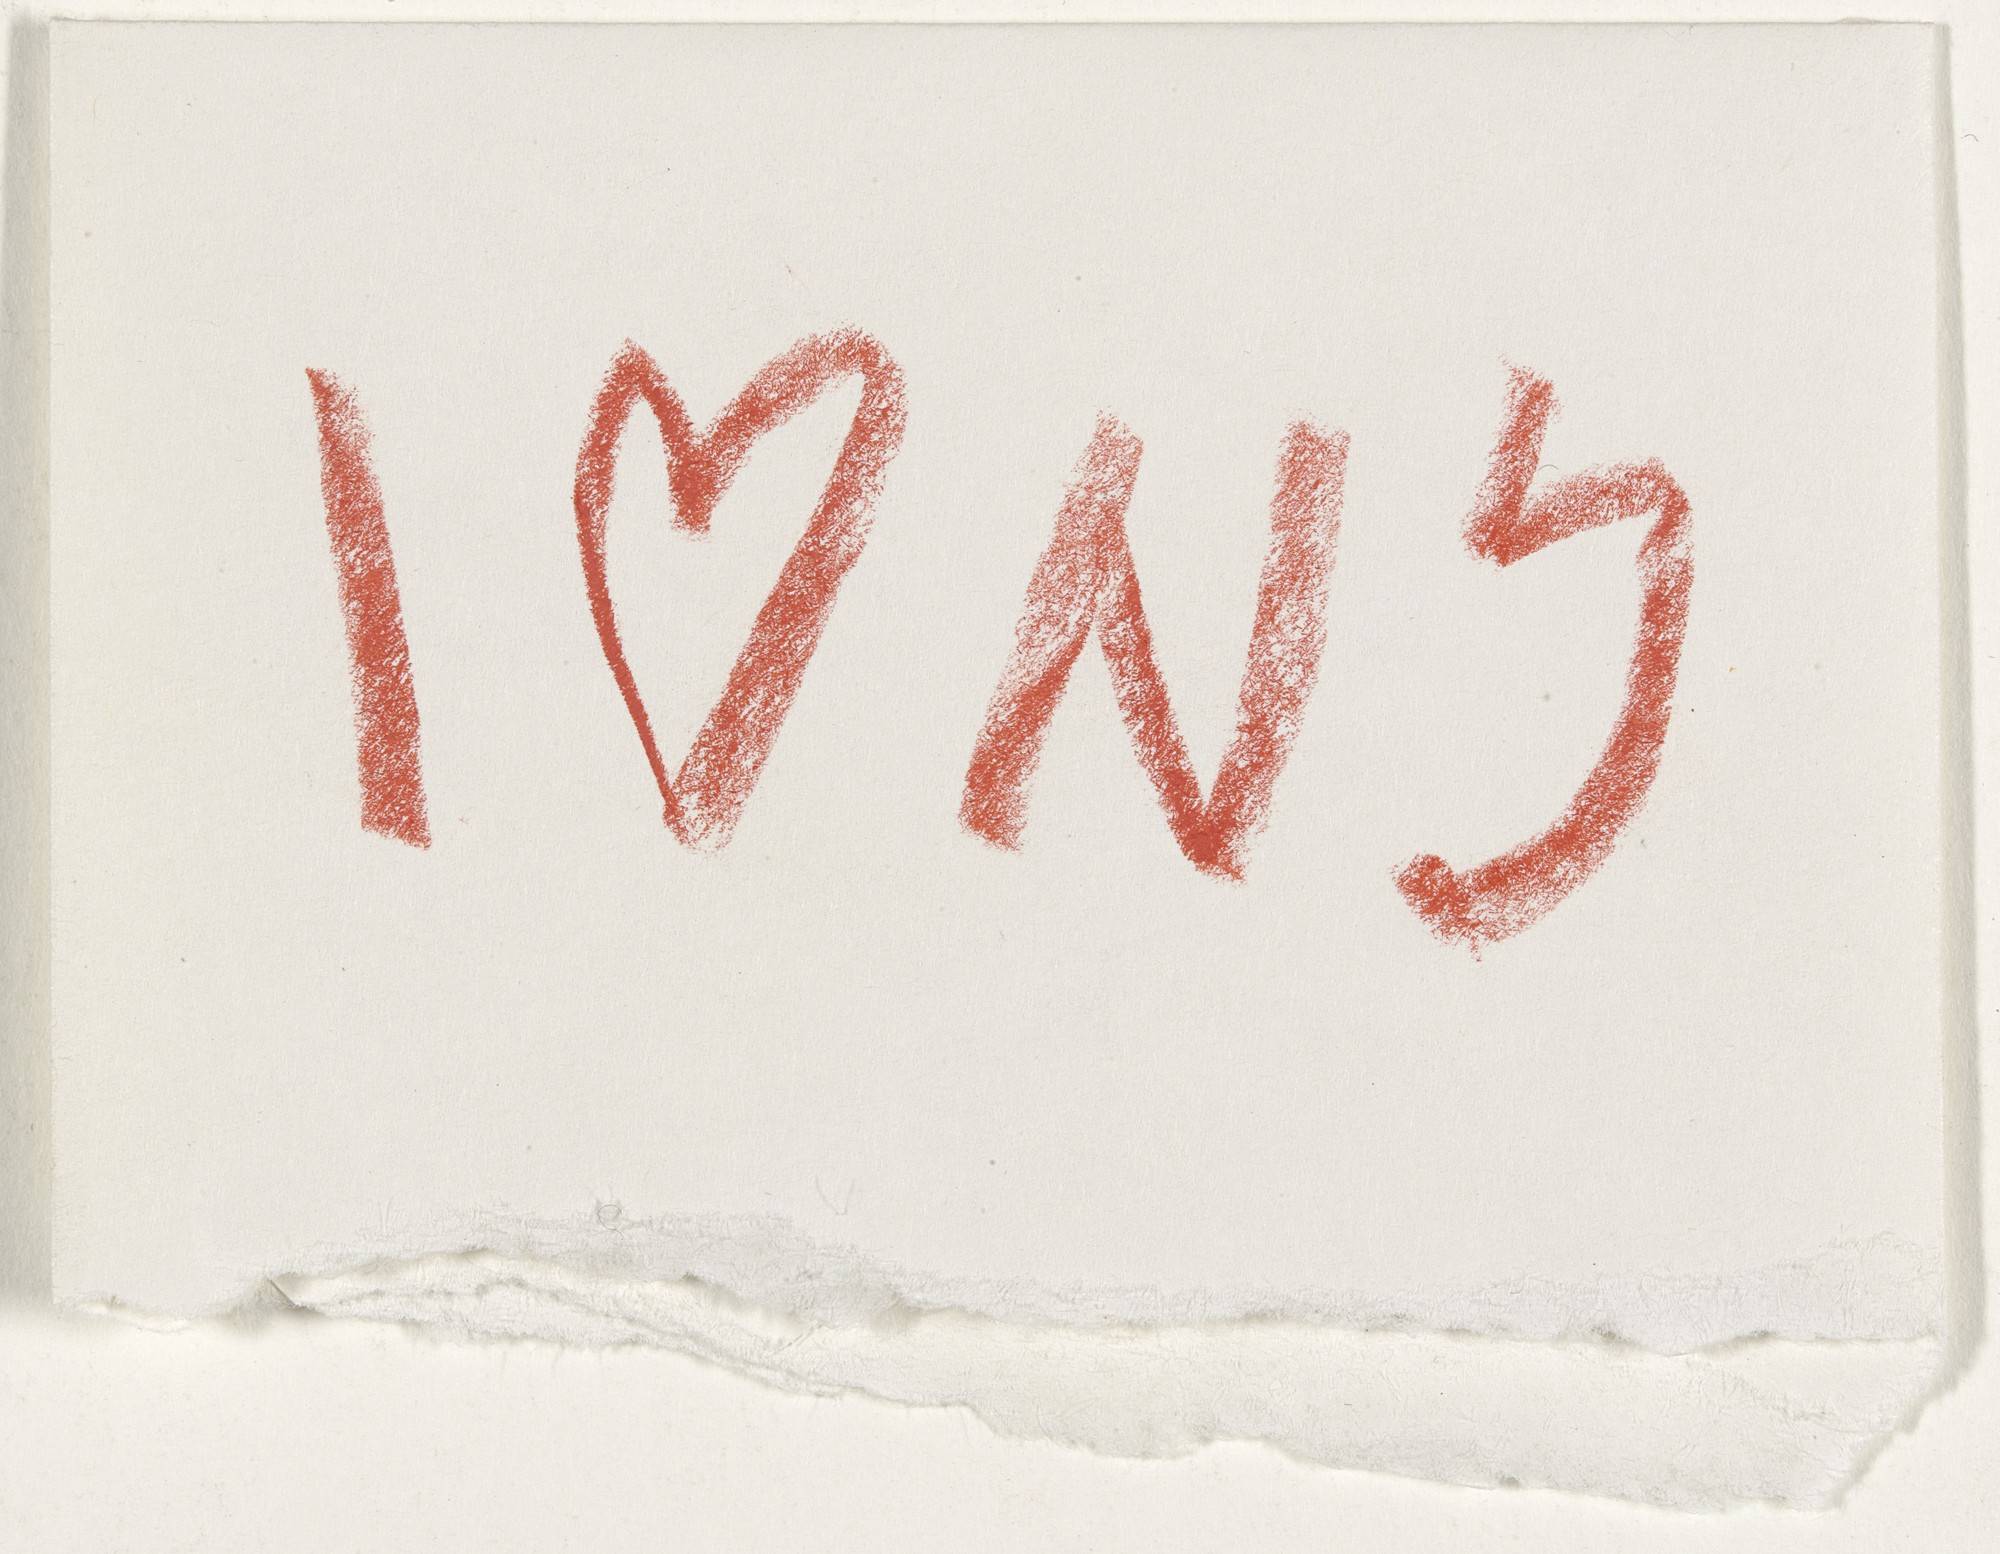 Premier croquis du logo "I Love New York", 1977 © MoMA